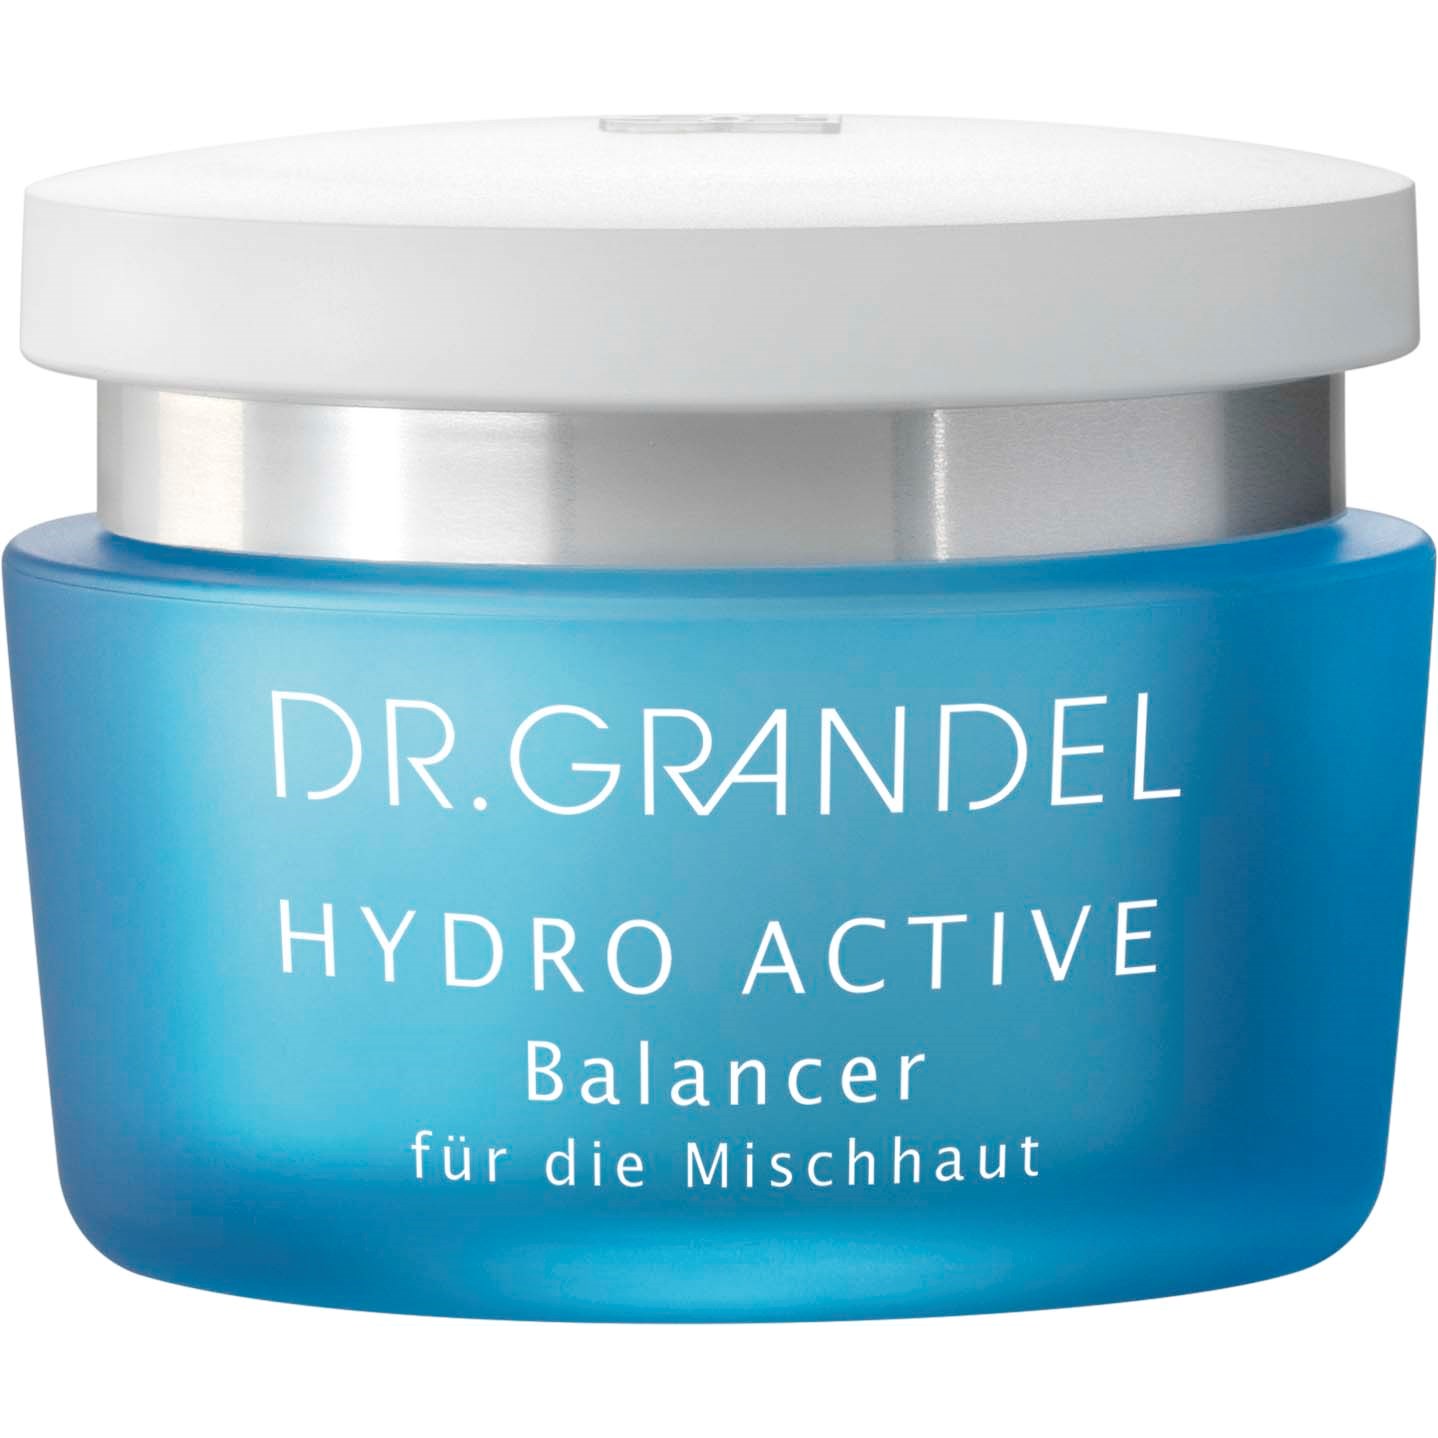 Dr. Grandel Hydro Active Balancer 50 ml